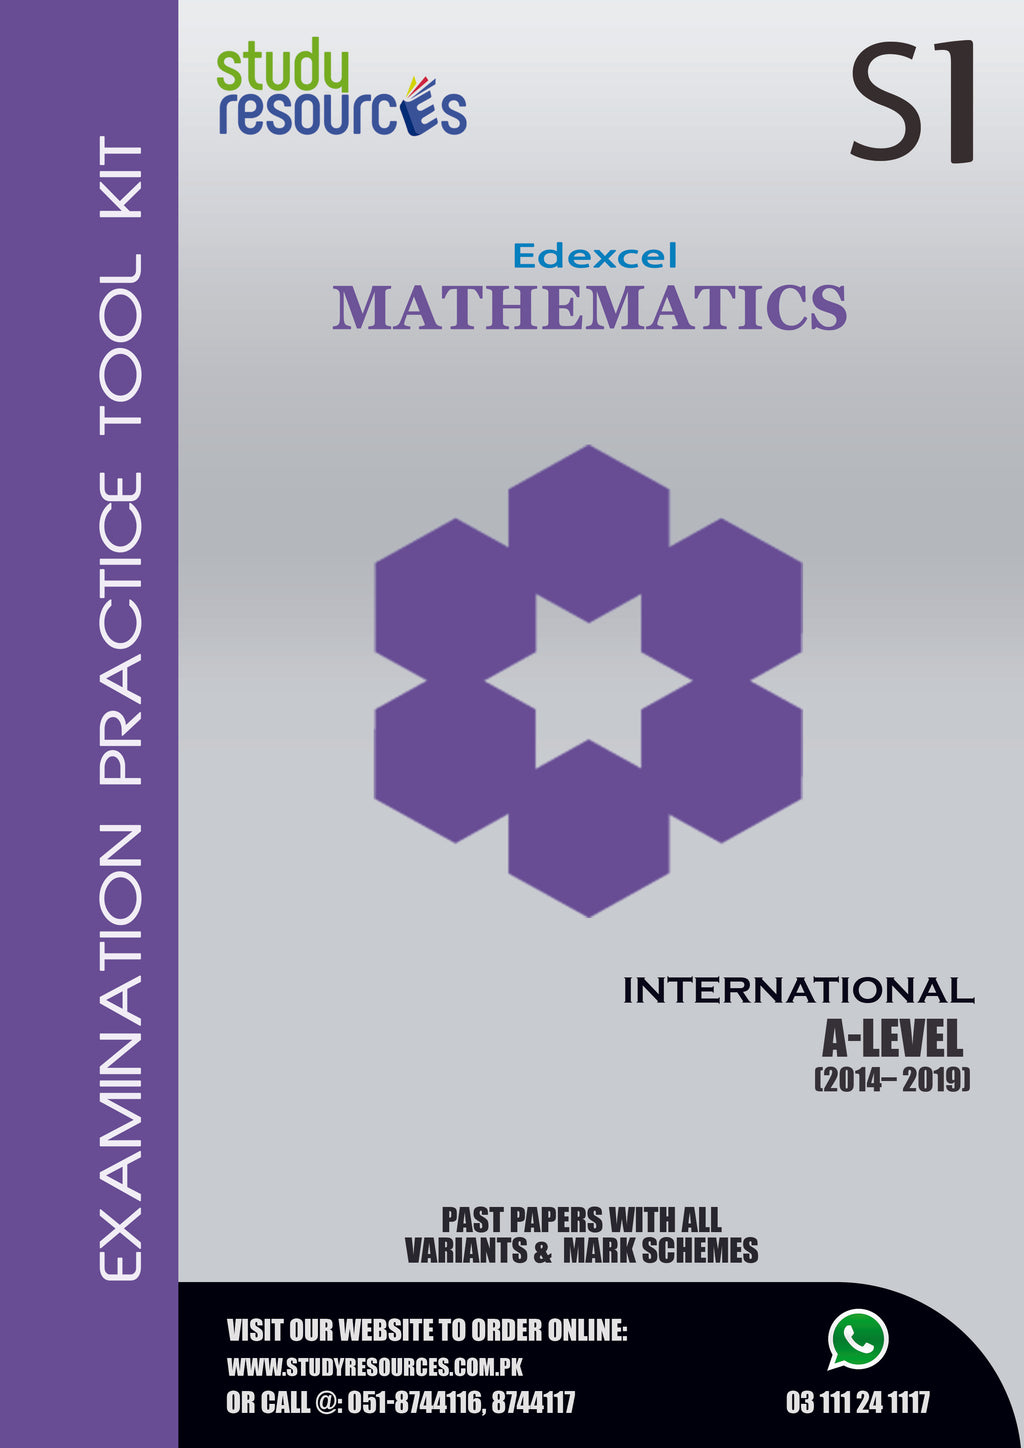 Edexcel A-Level Mathematics S-1 Past Papers (2014-2019)